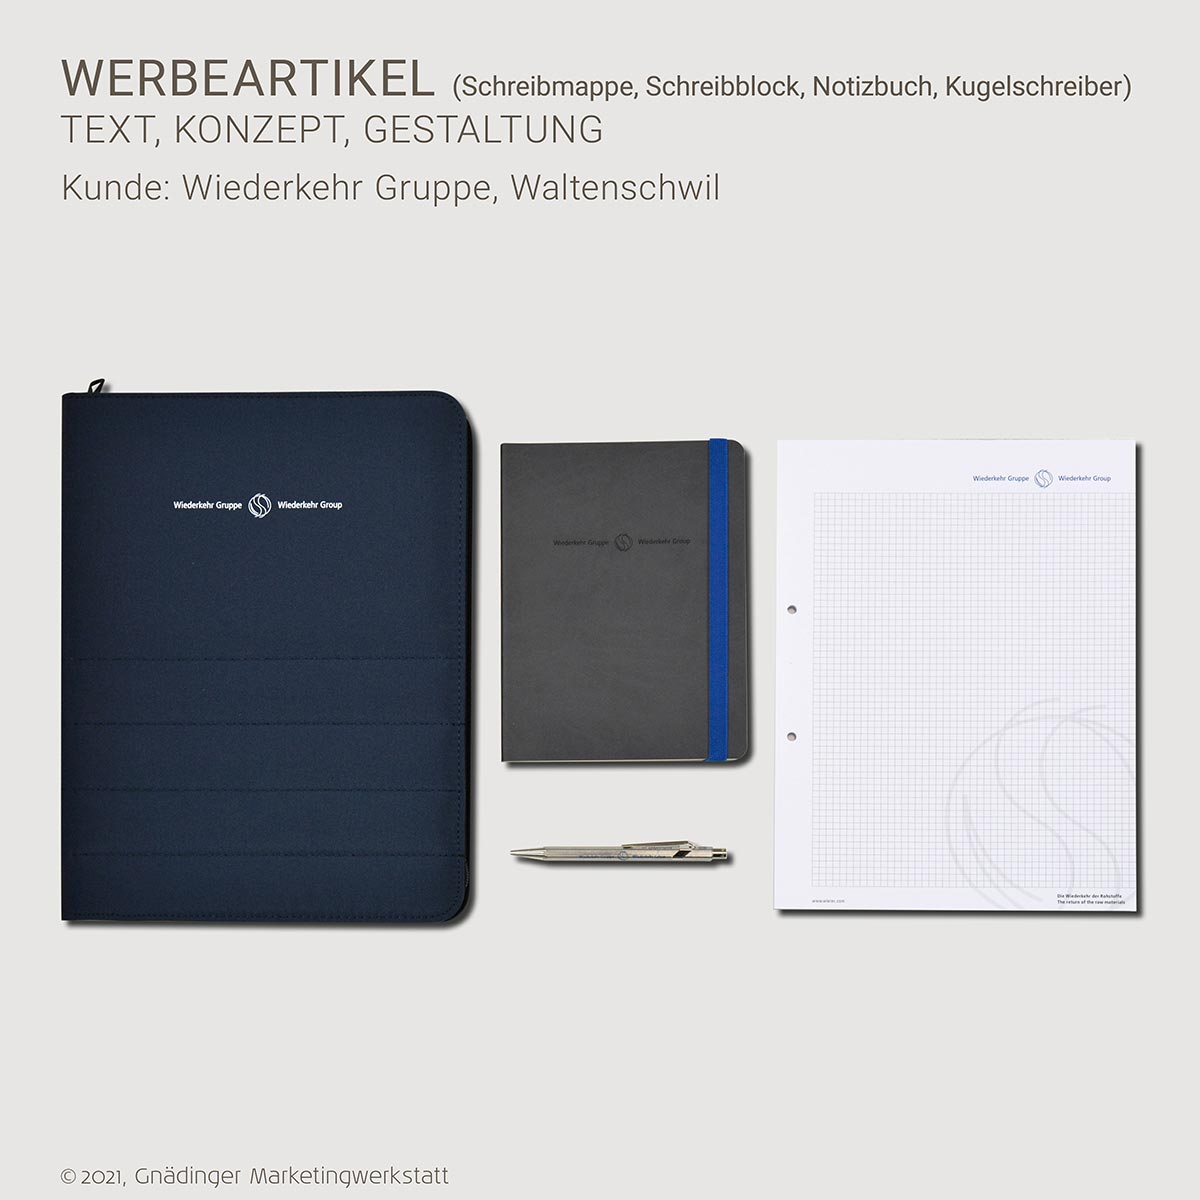 WEB1_GMW_Projekt_Wiederkehr-Recycling_Werbeartikel-Hochwertig_03-2020